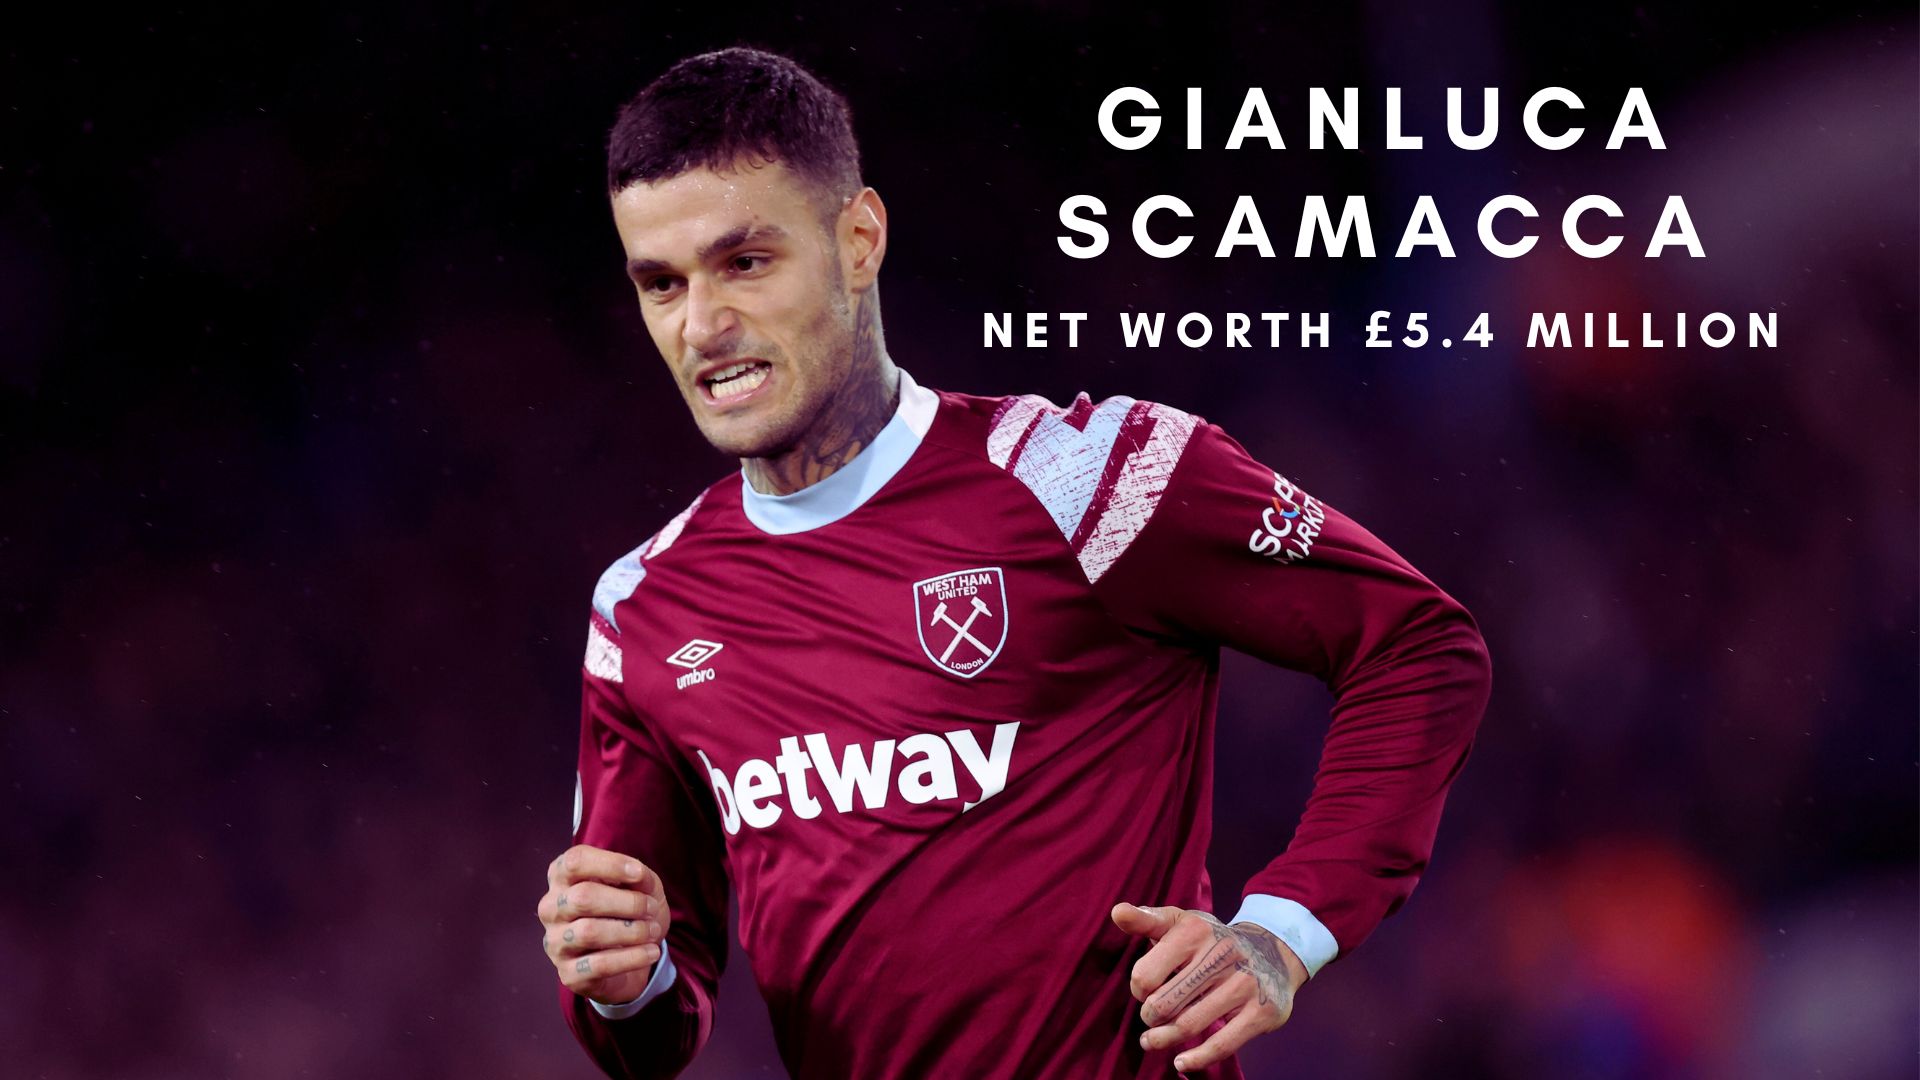 Gianluca Scamacca of West Ham United looks on.